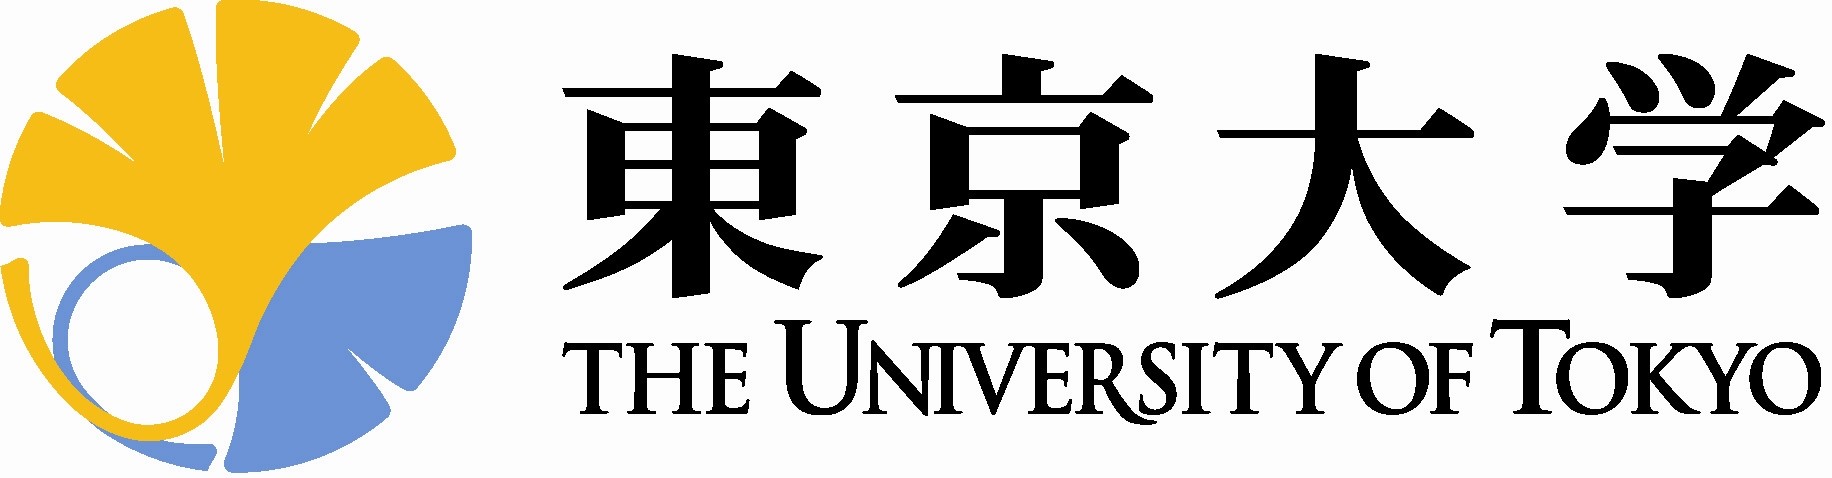 TokyoUni_logo.jpg